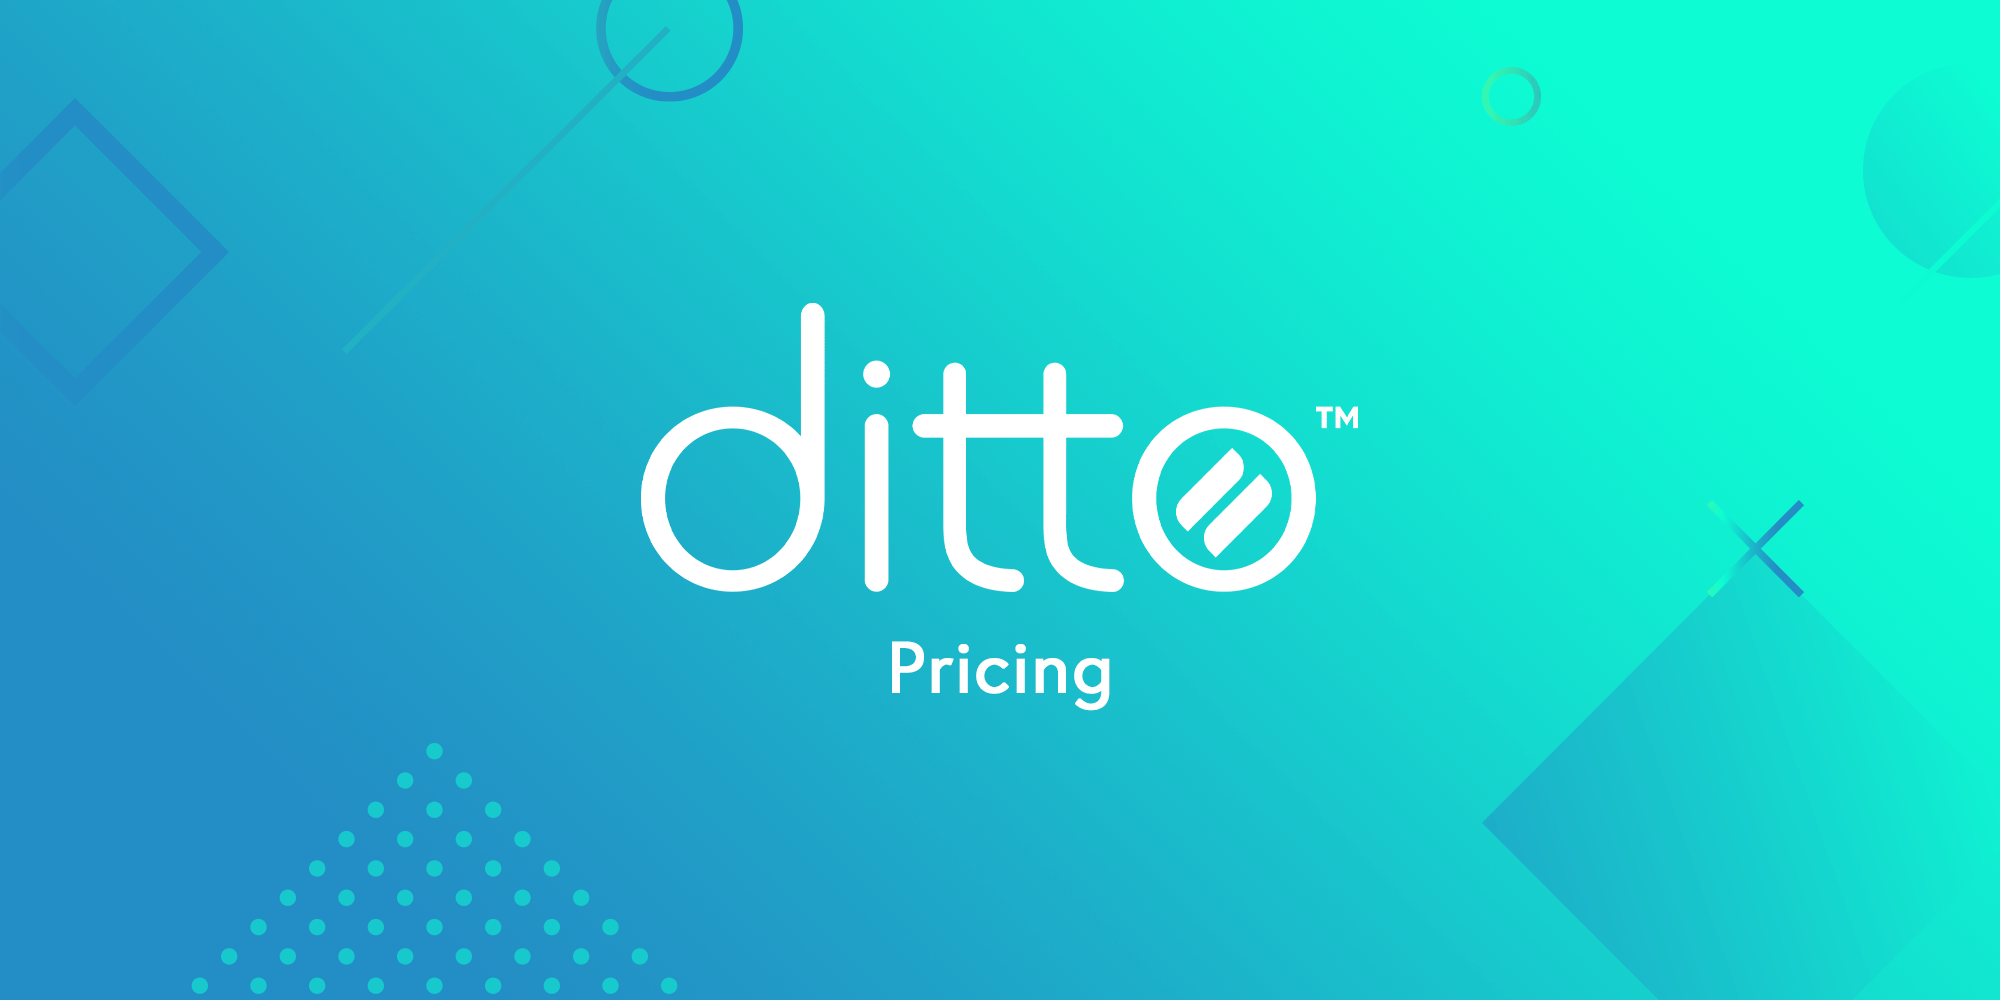 Ditto Plus: Premium Distribution & Record Label Services — Buzzsonic